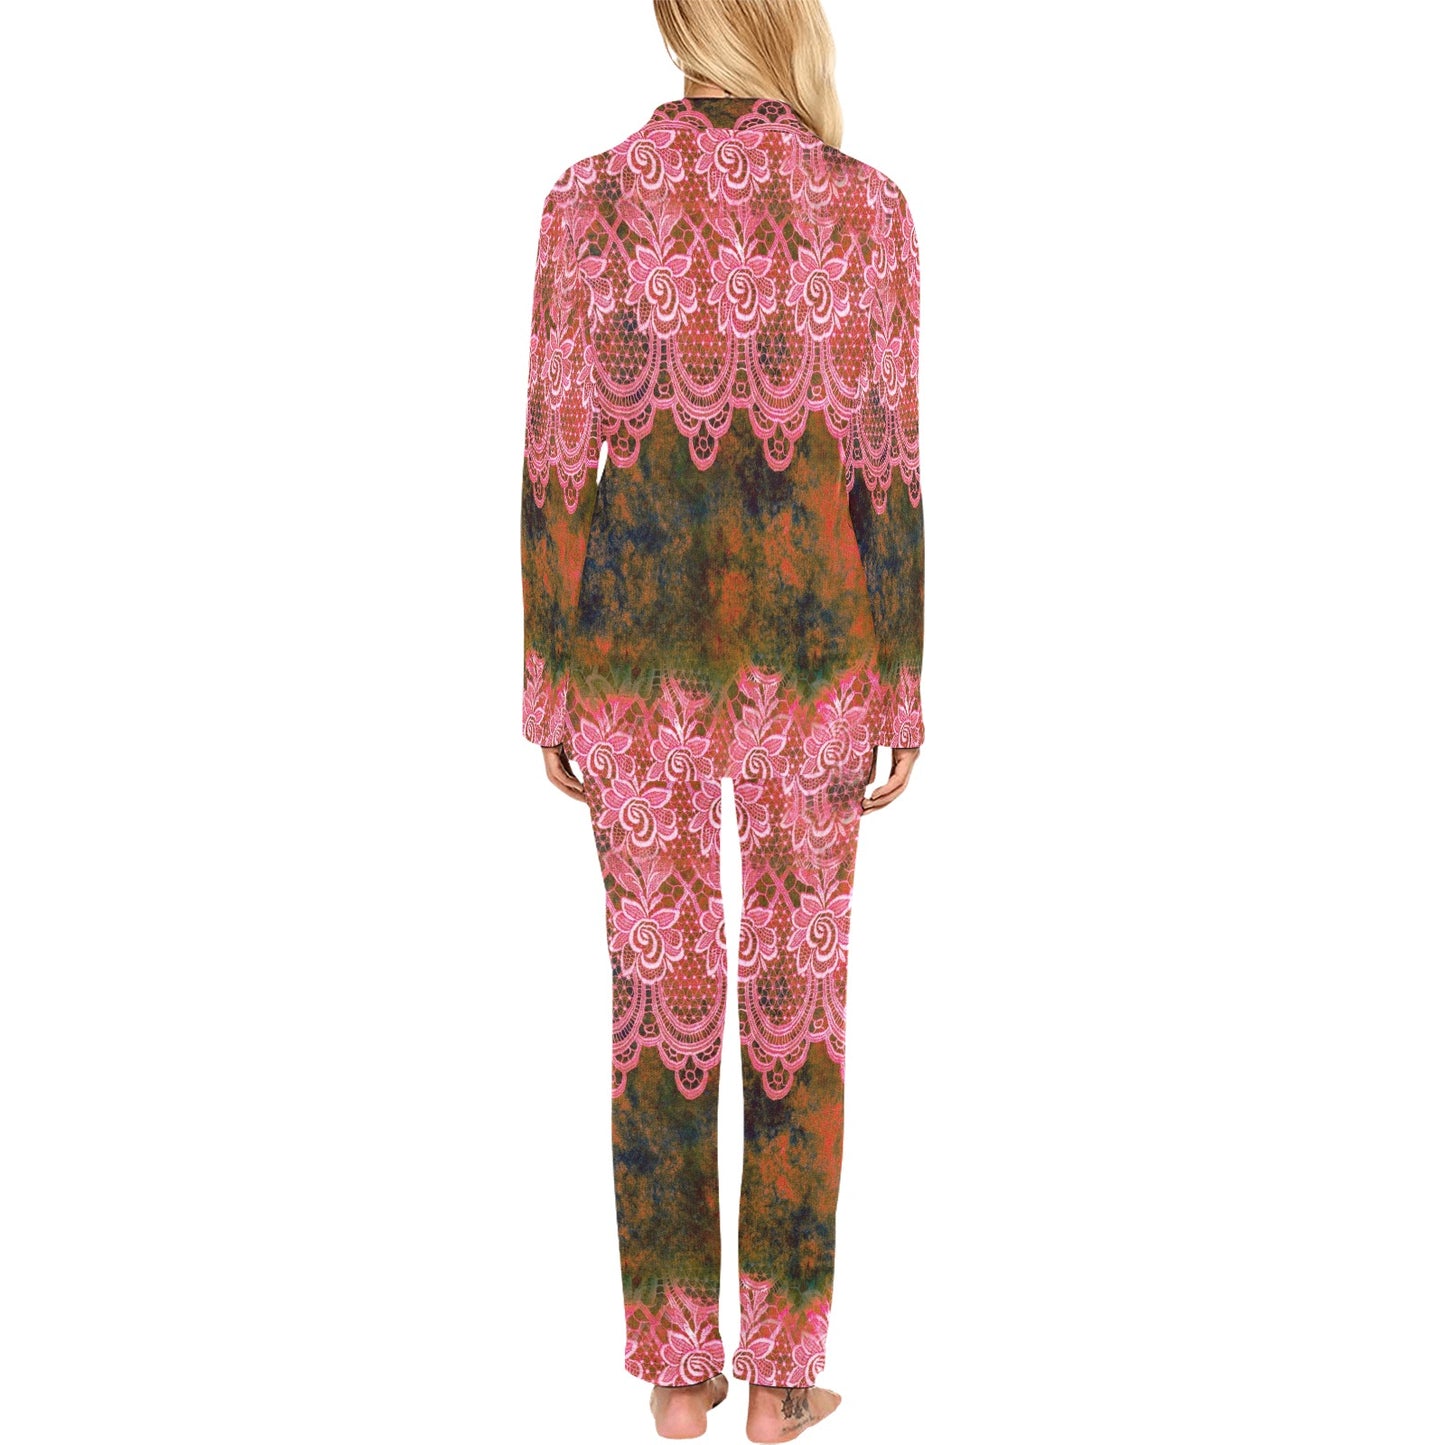 Victorian printed lace pajama set, design 32 Women's Long Pajama Set (Sets 02)